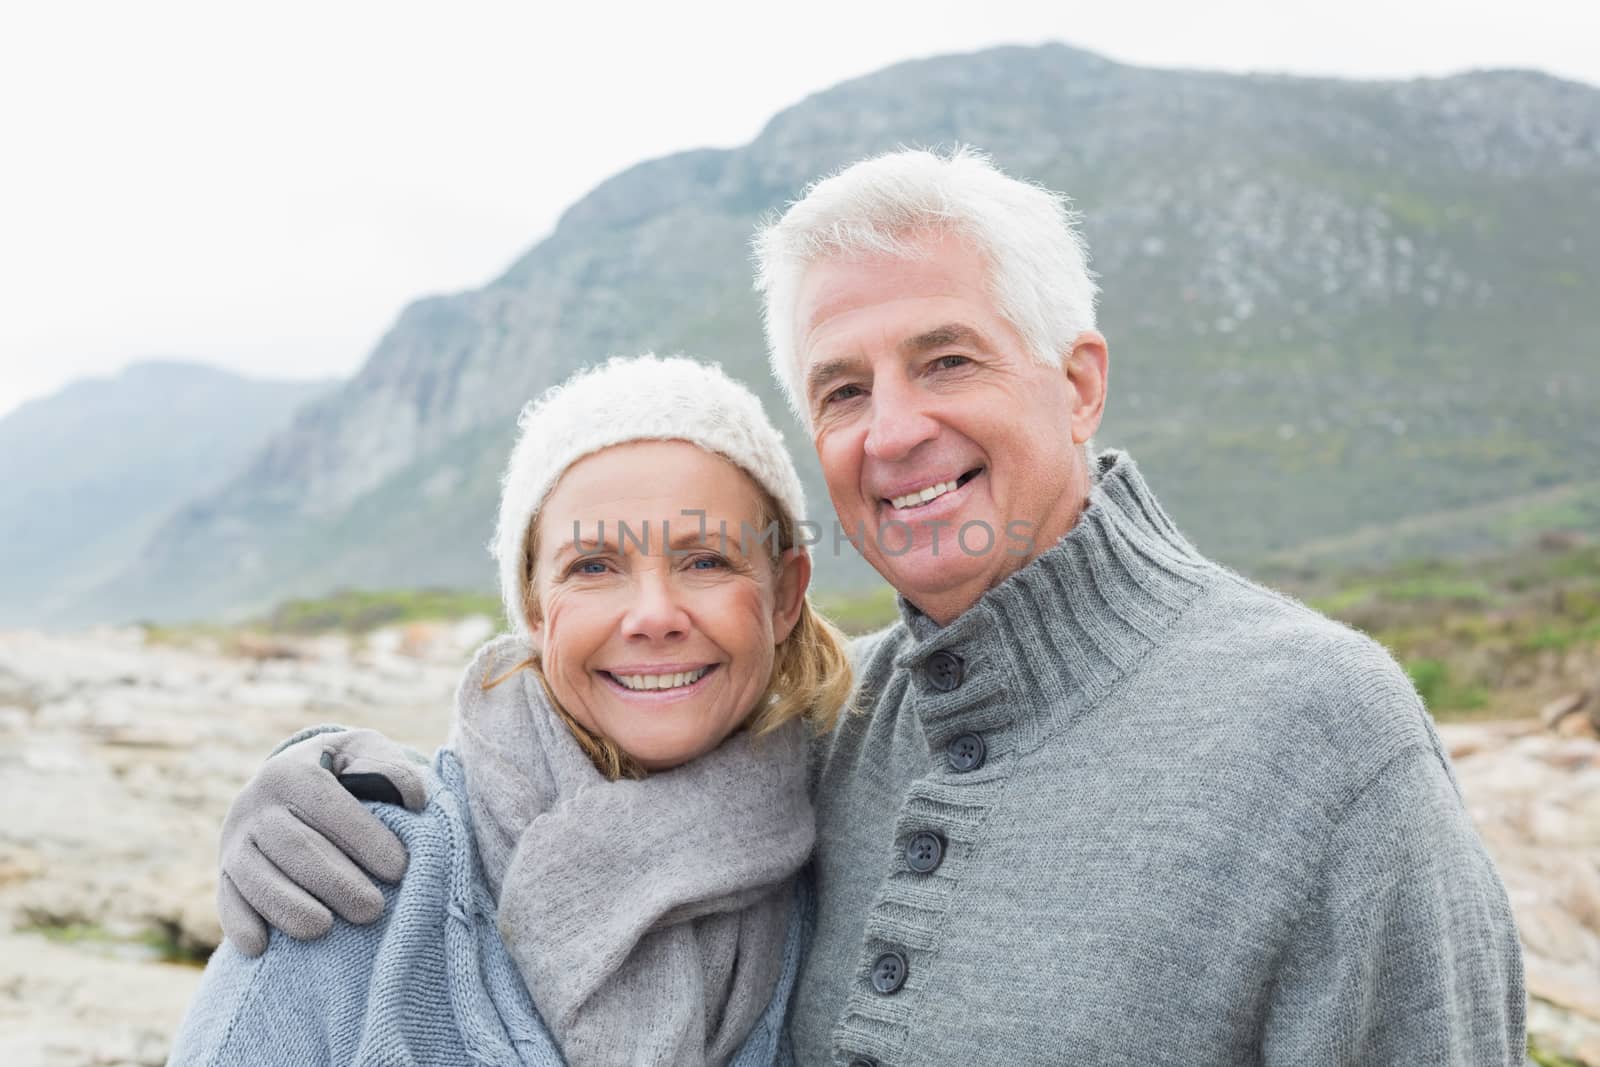 Portrait of a romantic senior couple together on a rocky landscape